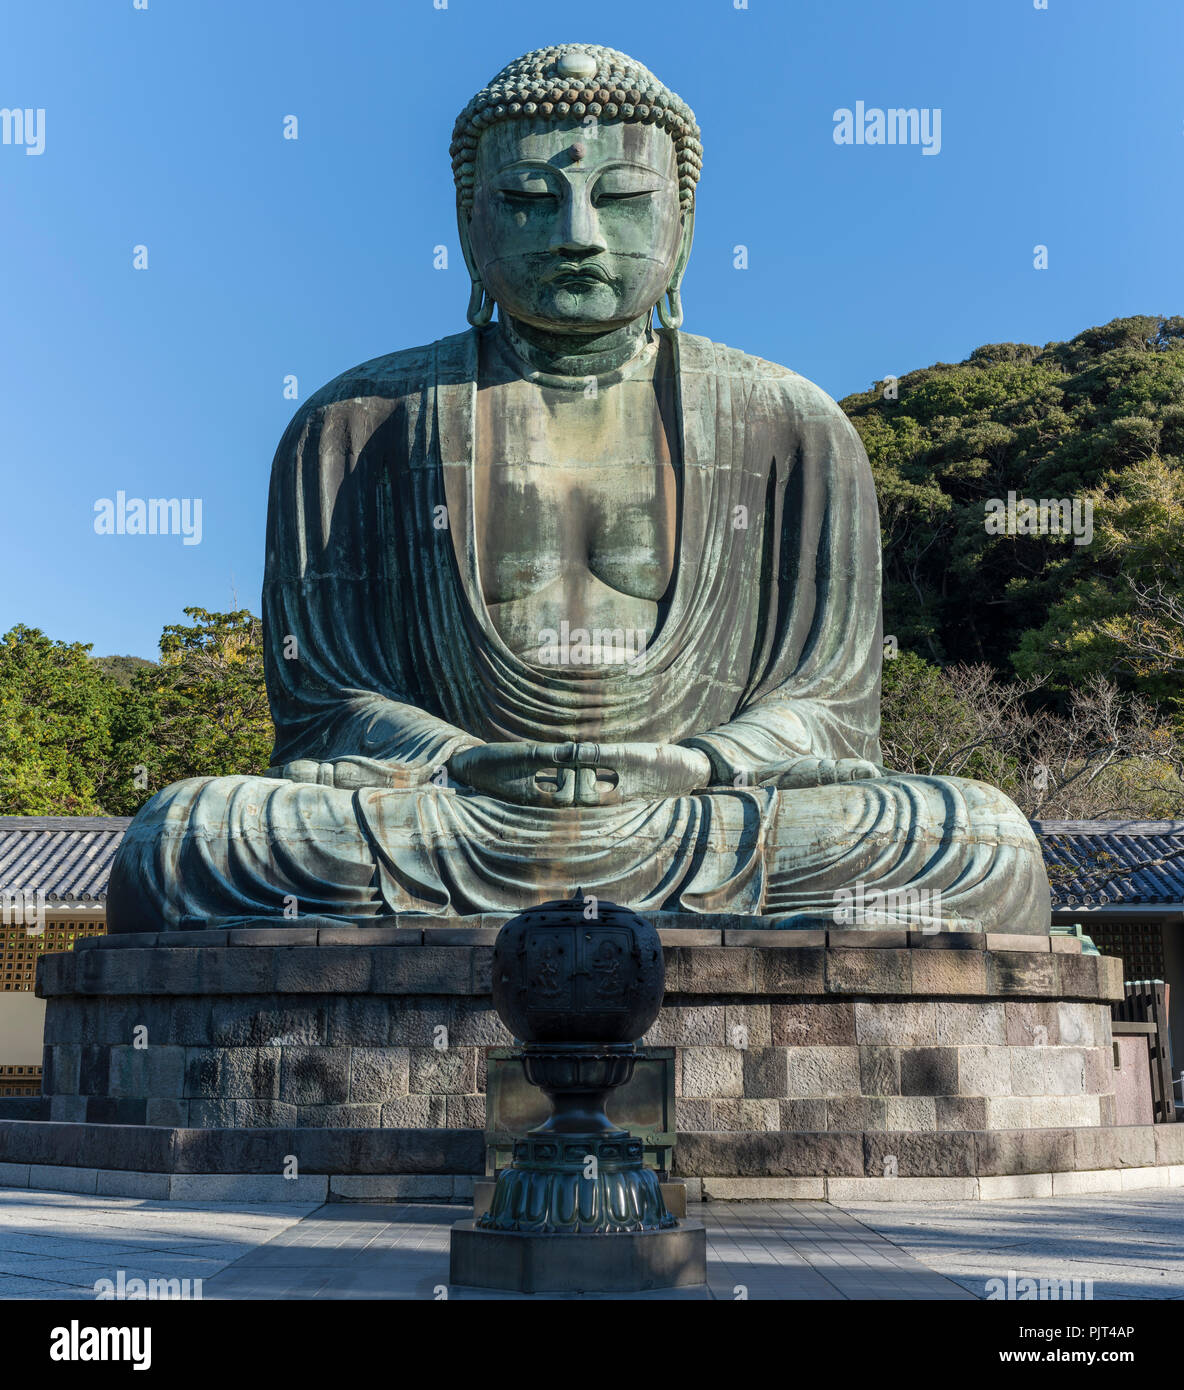 The Daibutsu (Great Buddha) statue at Kotokuin, a temple in Kamakura, Japan. Stock Photo